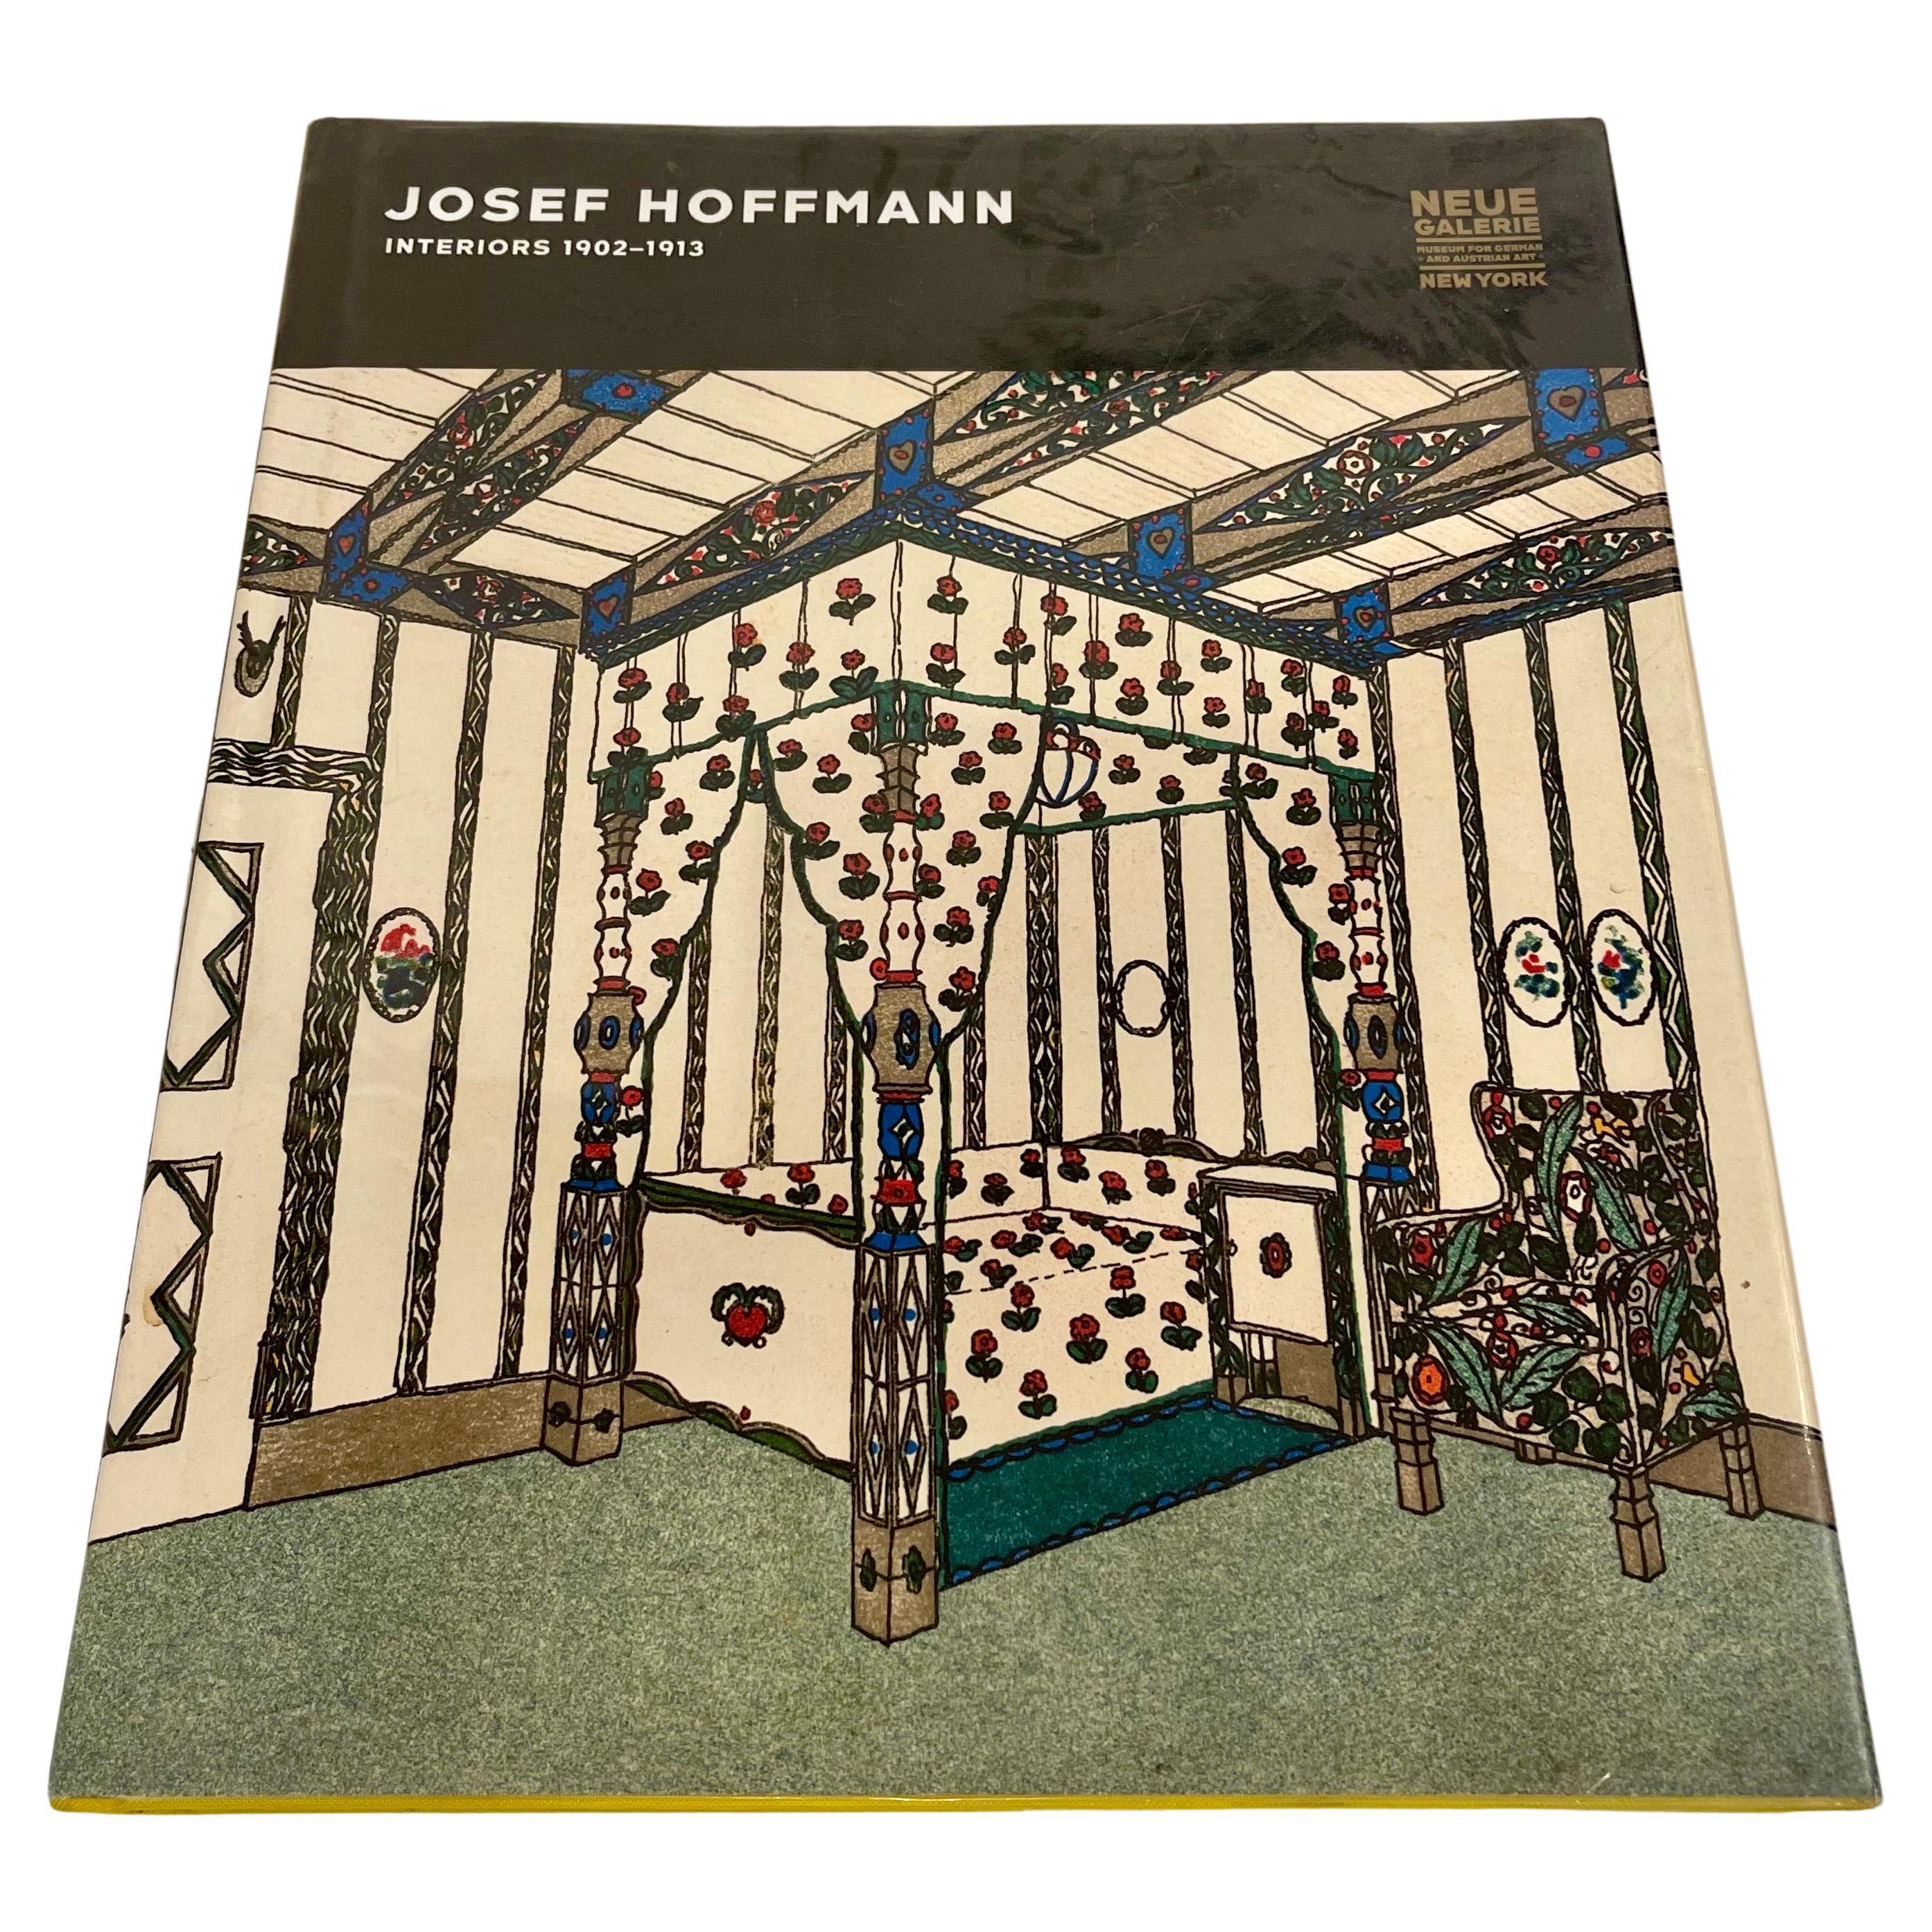 Josef Hoffmann: Interiors 1902-1913, Christian Witt-Dörring, Prestel, 2006 For Sale